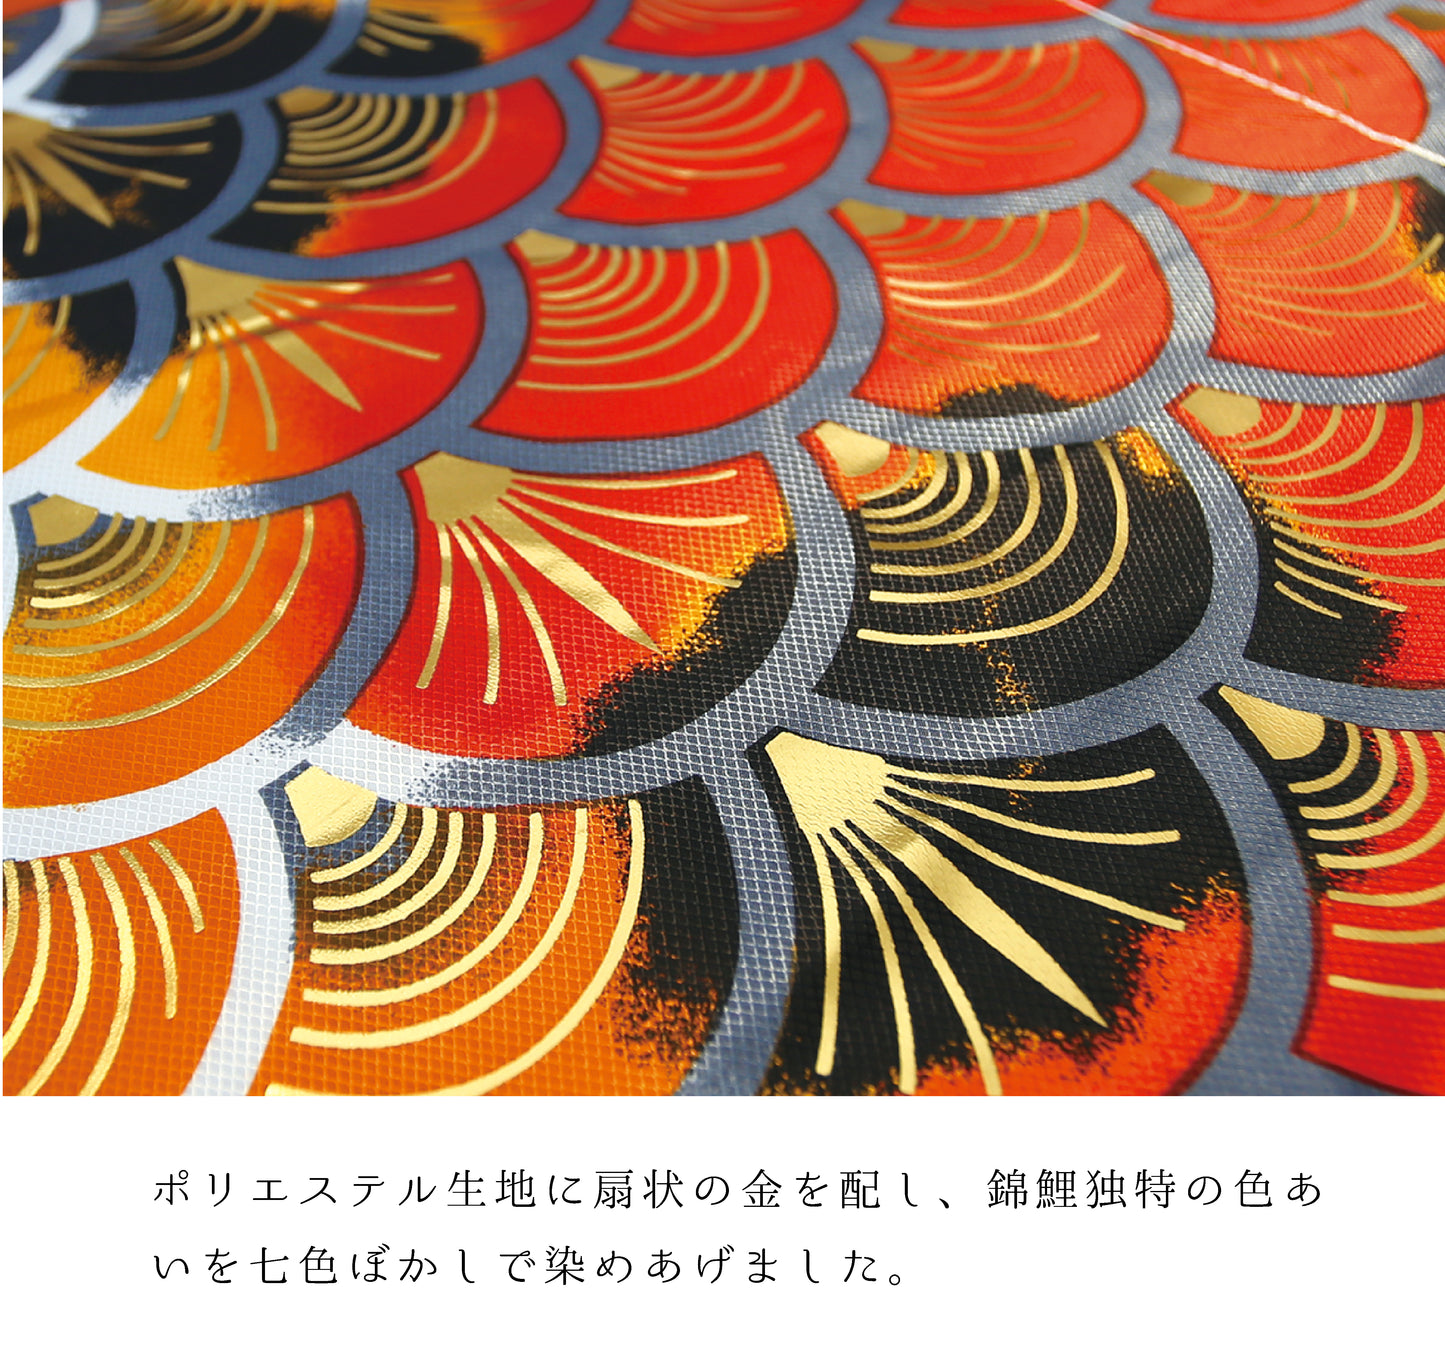 Presentation Hand-dyed Yuzen Carp [Kyo Nishiki] 6-piece Niwa Deco Set Tokunaga Carp Streamer 